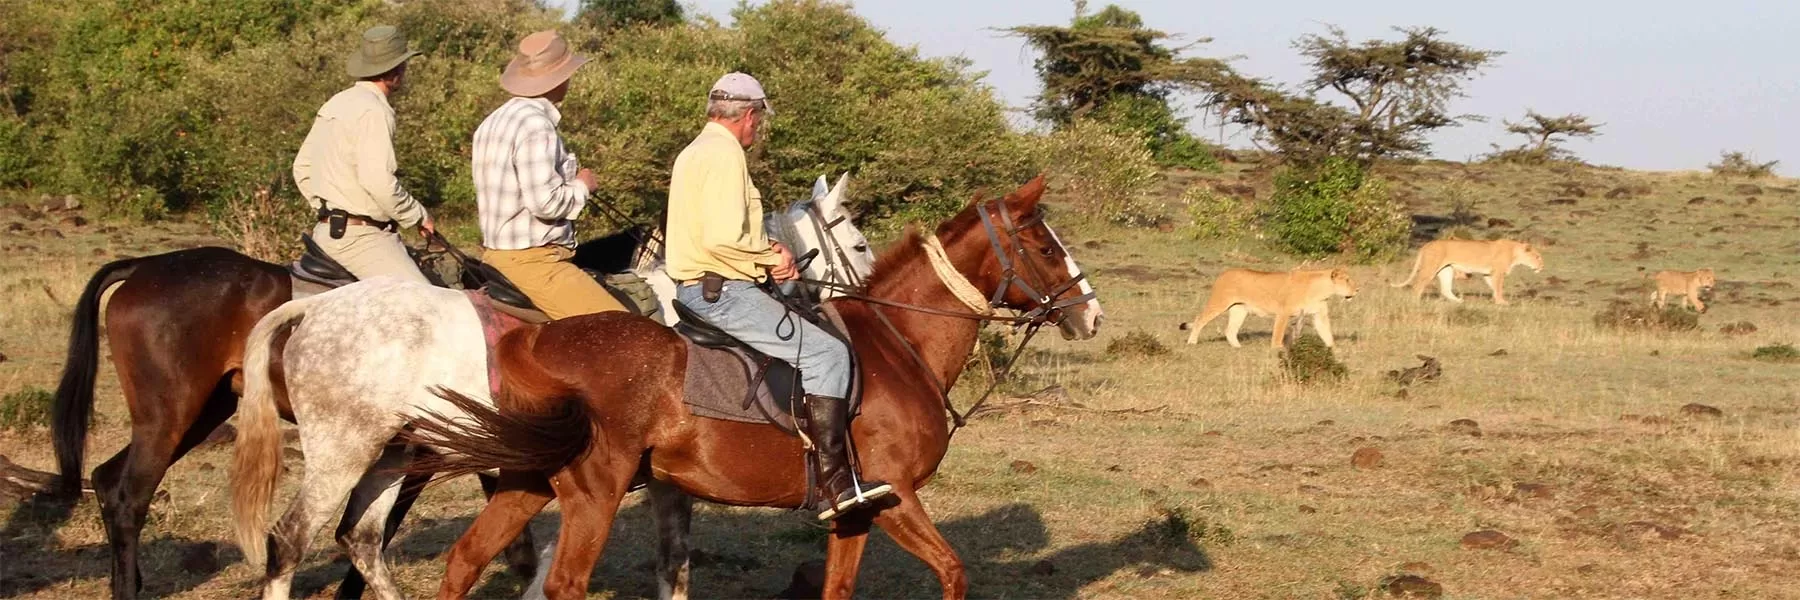 Horse riding safaris in Maasai Mara